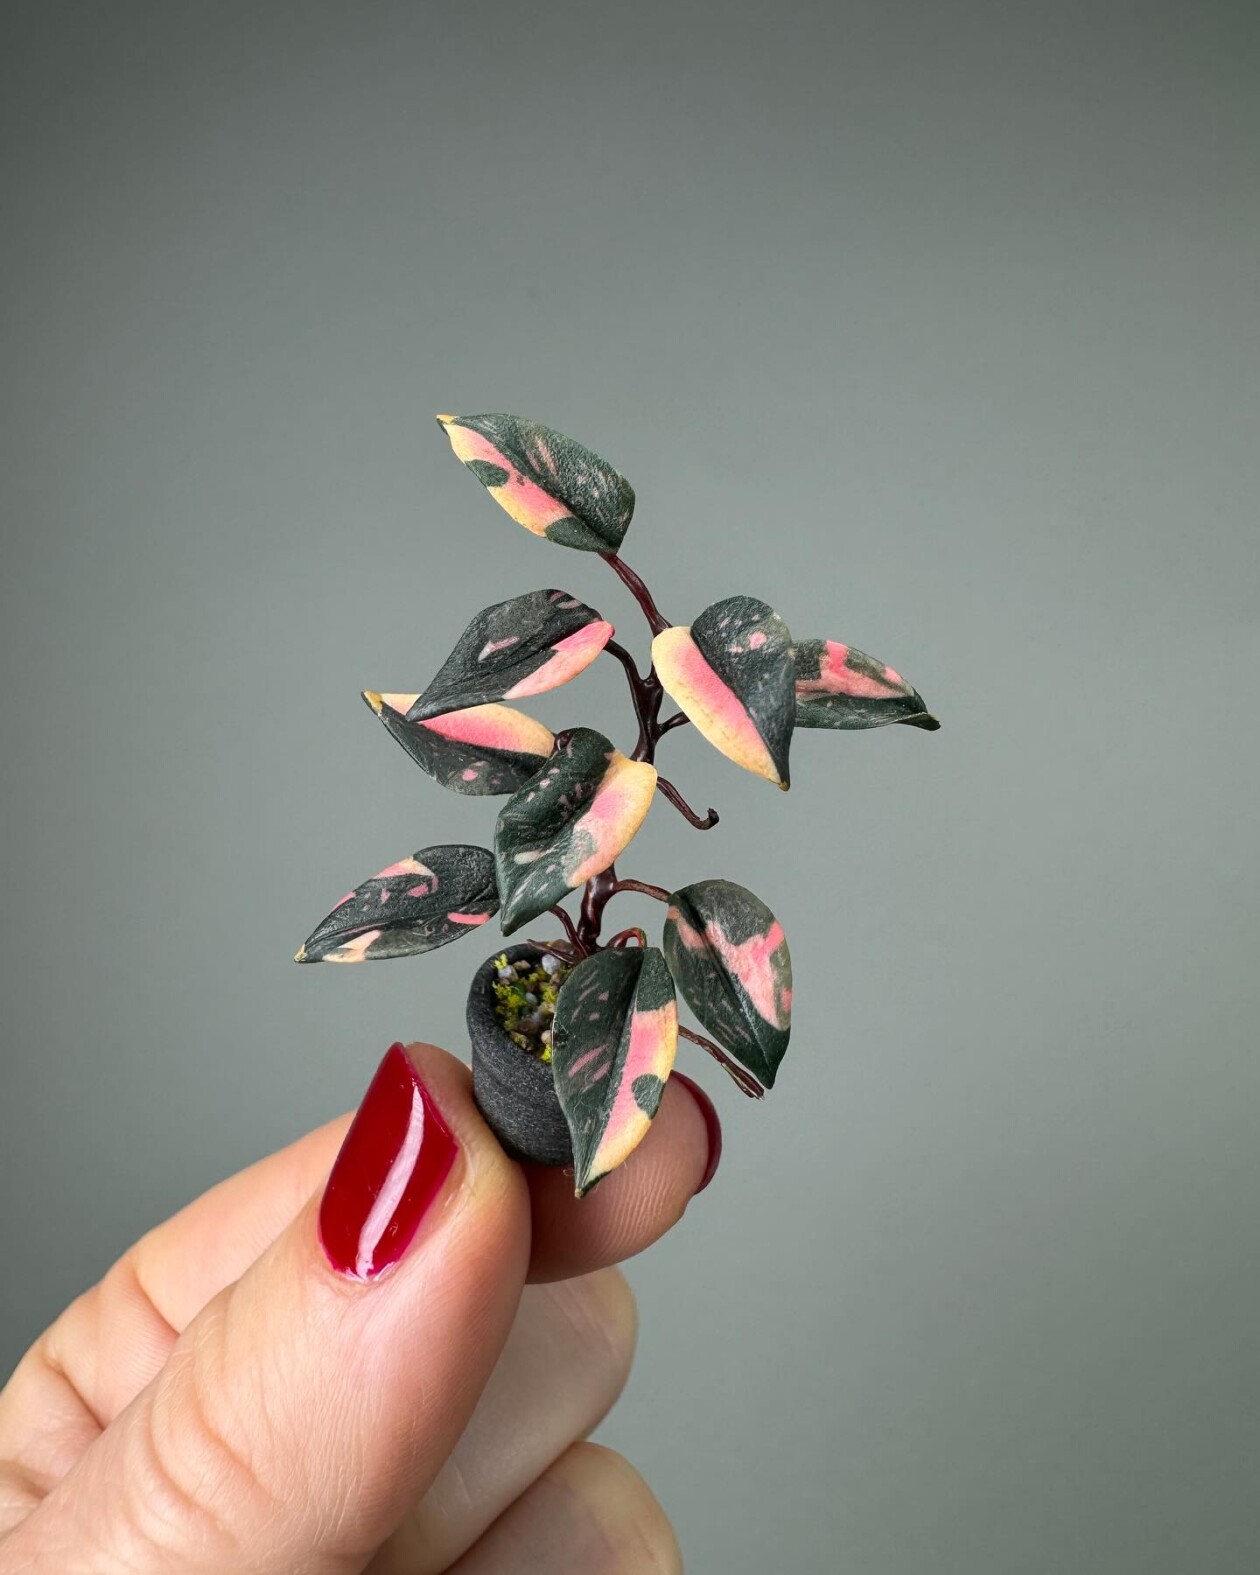 Handmade Miniature Polymer Clay Plants By Astrid Wilk (9)